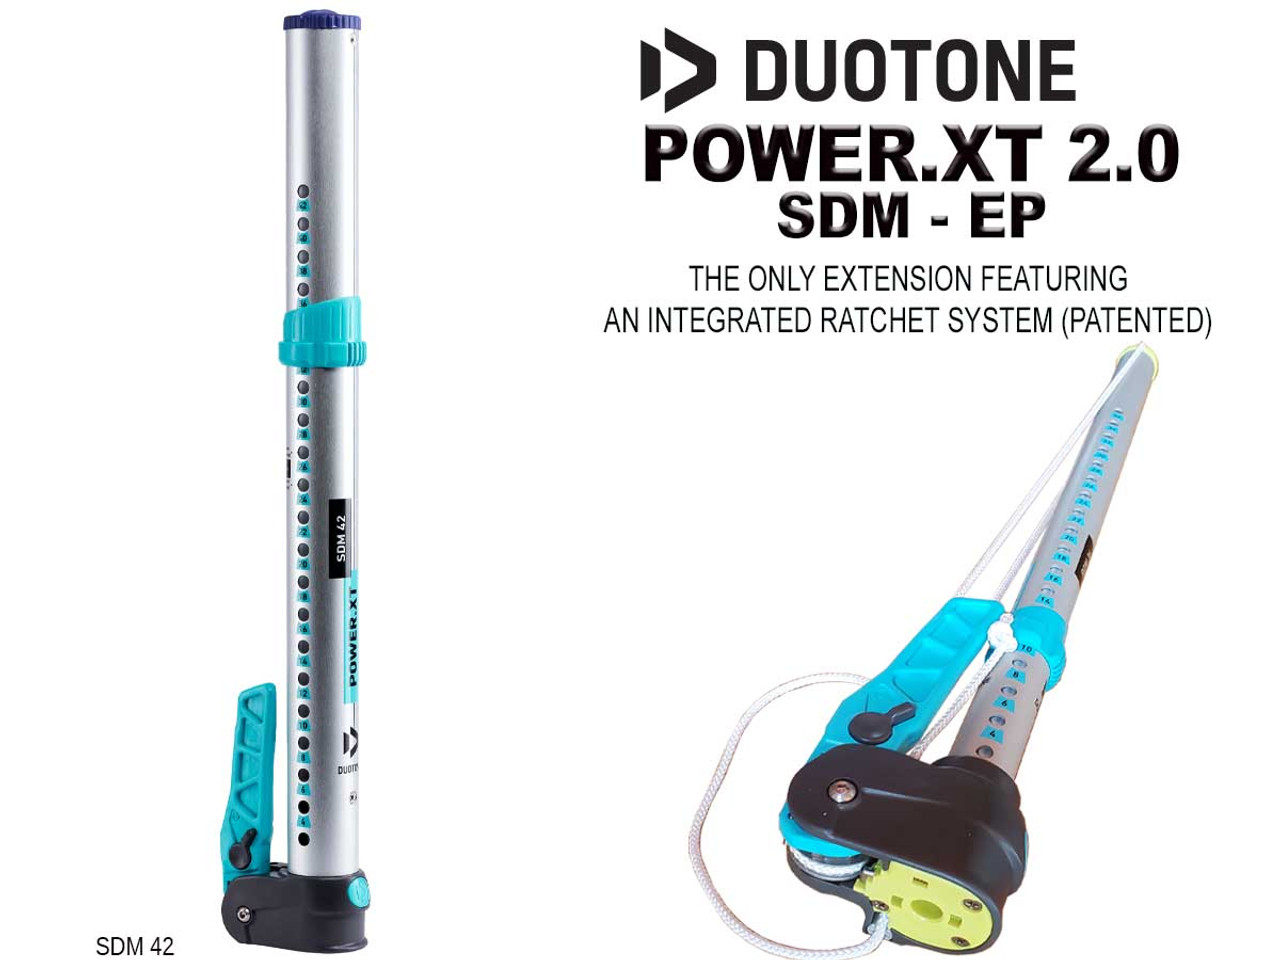 Duotone Power XT 2.0 SDM